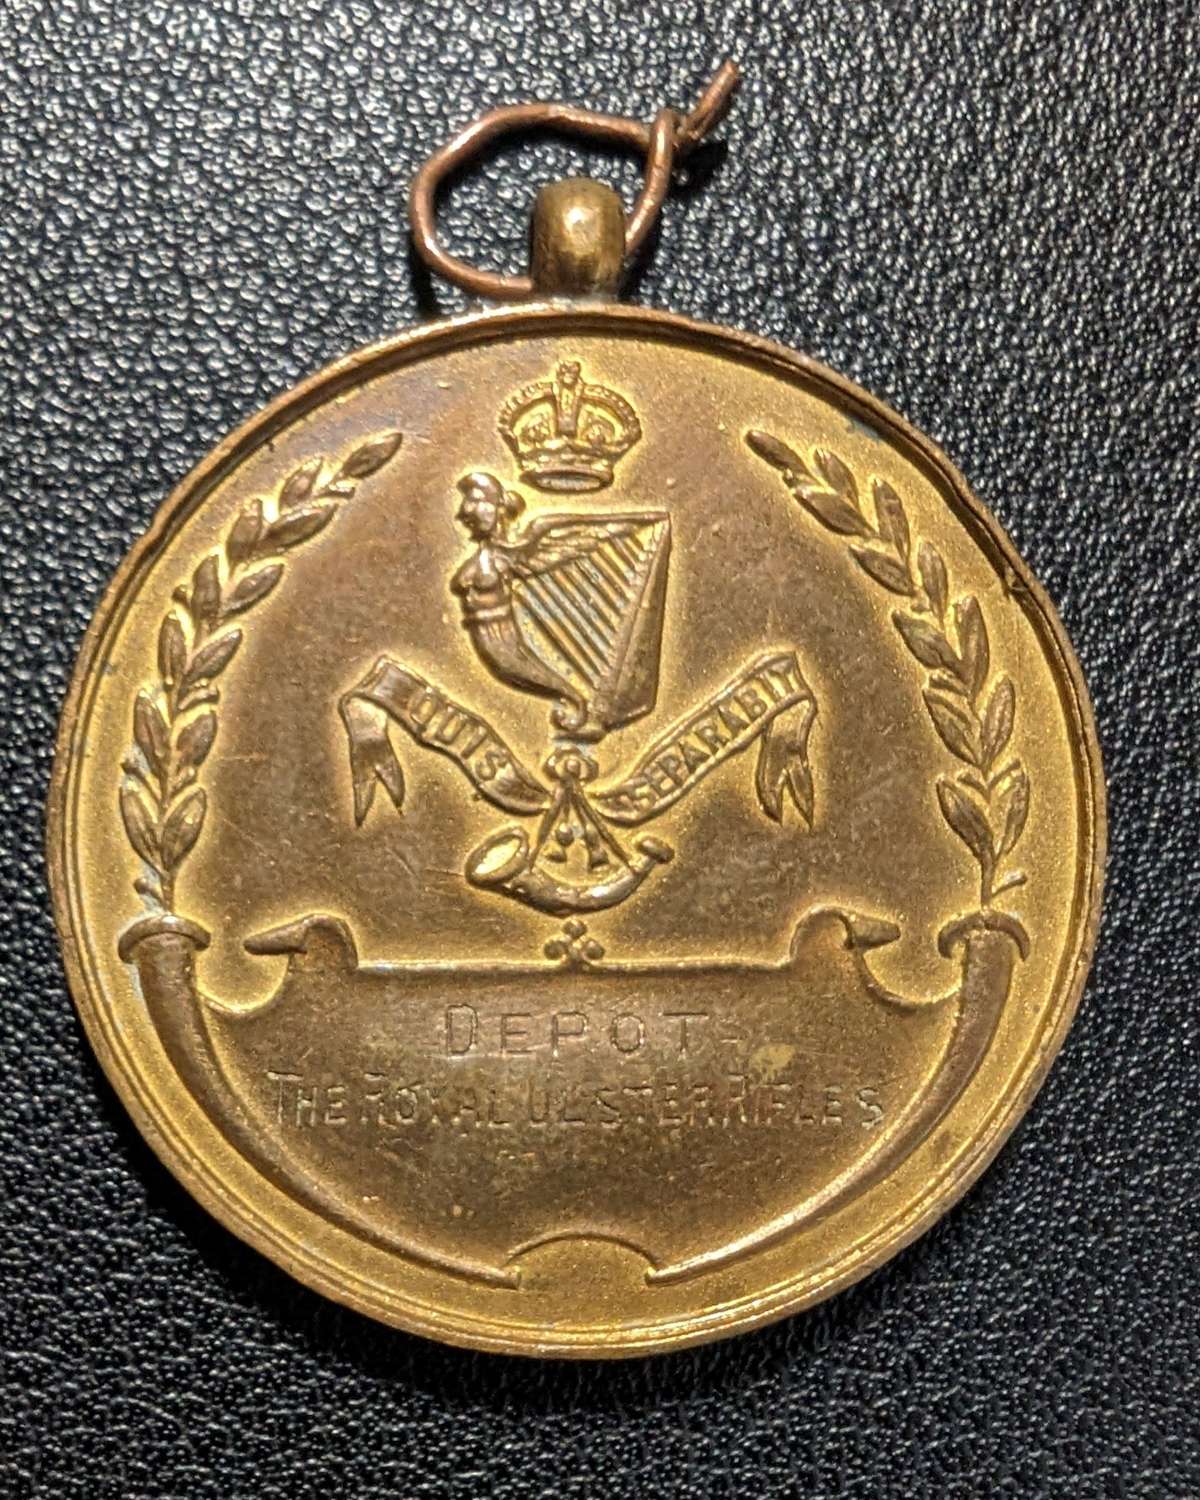 Royal Ulster Rifles Depot Runner up Medal